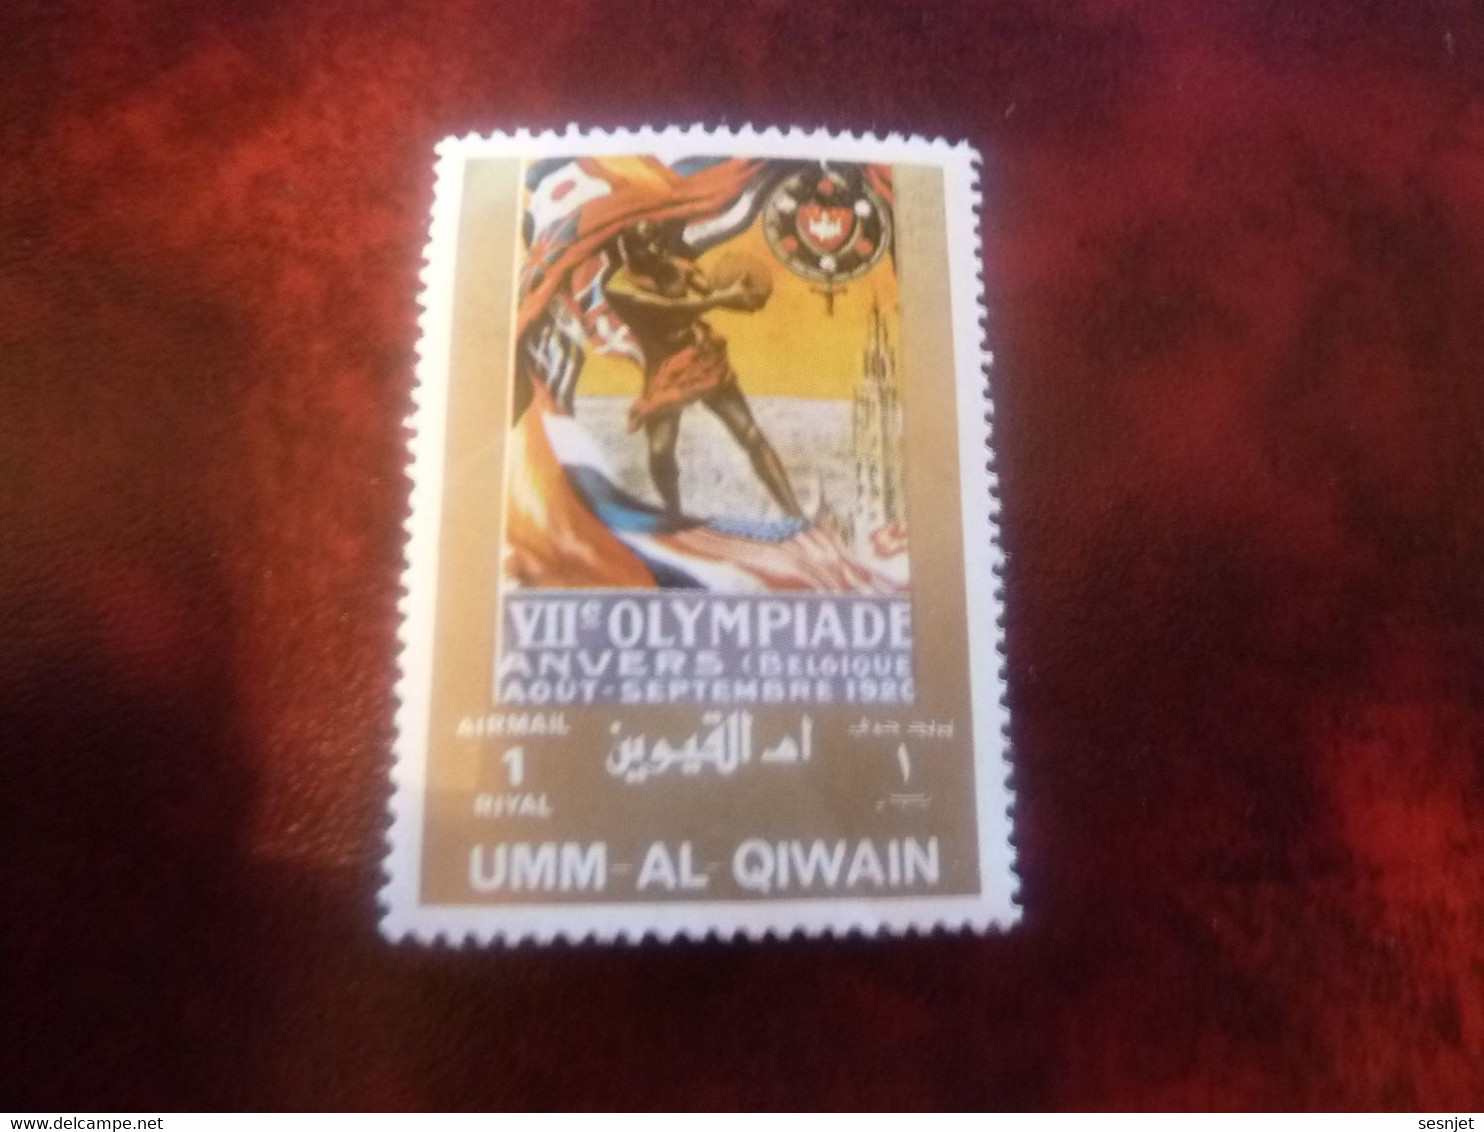 Umm Al Qiwain - Anvers 1920 - Val 1 Riyal - Air Mail - Polychrome - Oblitéré - Année 1972 - - Sommer 1920: Antwerpen